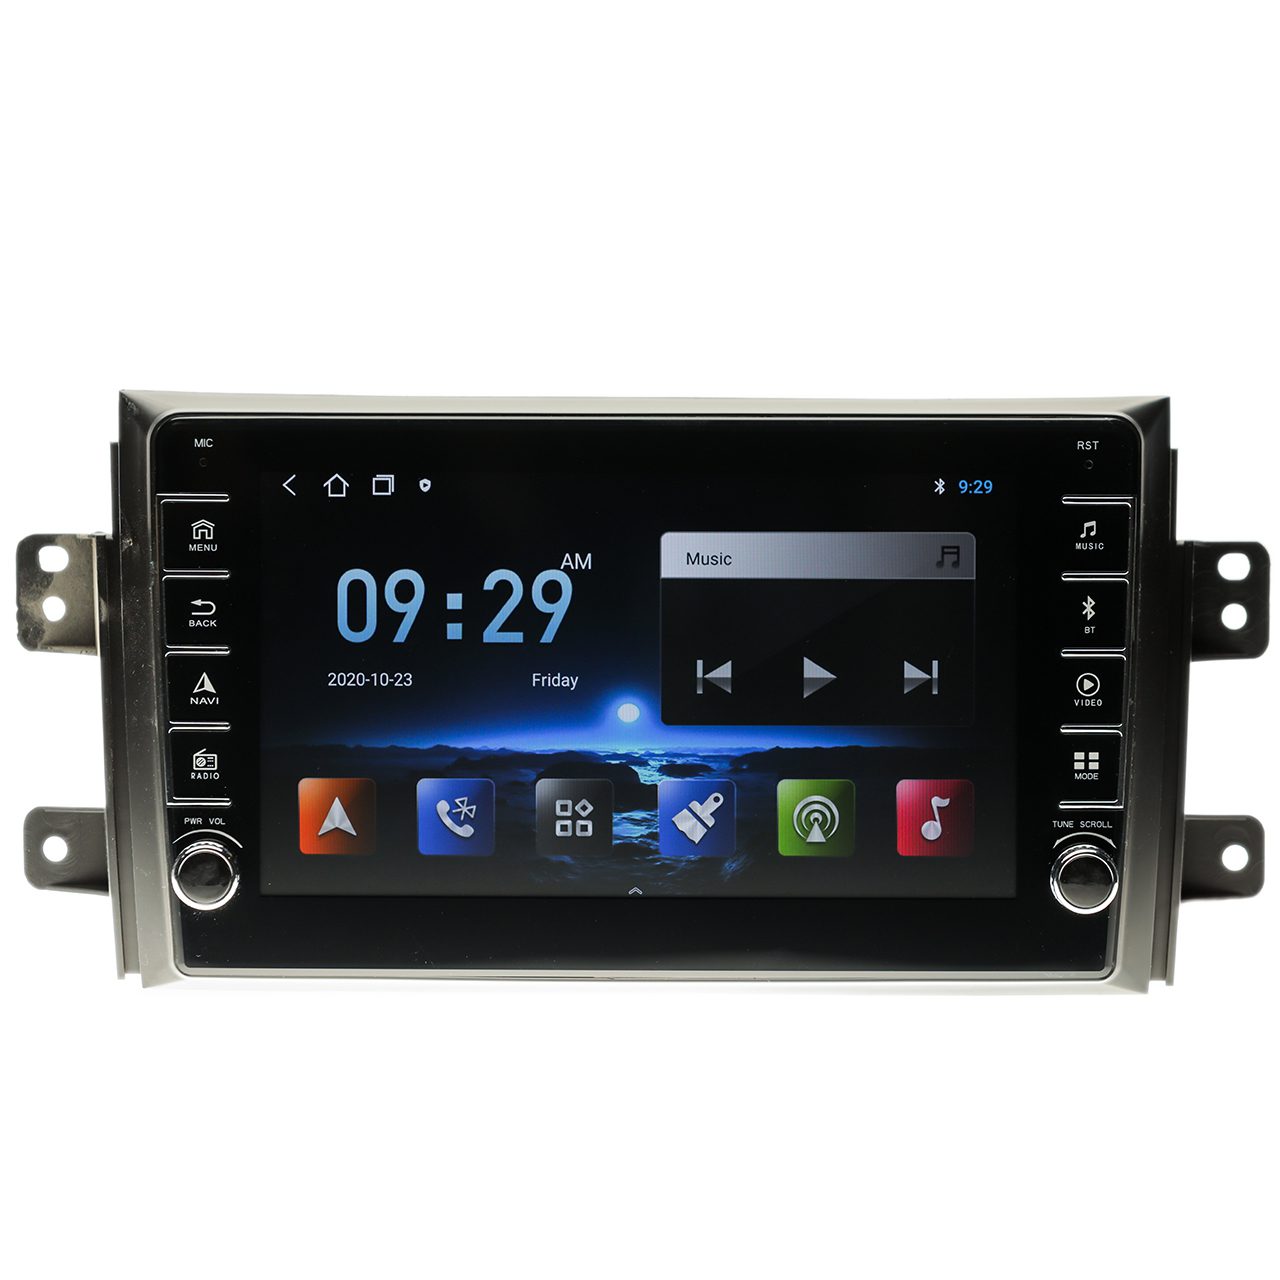 Navigatie AUTONAV Android GPS Dedicata Suzuki SX4 2006-2014, Model PRO Memorie 128GB Stocare, 6GB DDR3 RAM, Butoane Laterale Si Regulator Volum, Display 8